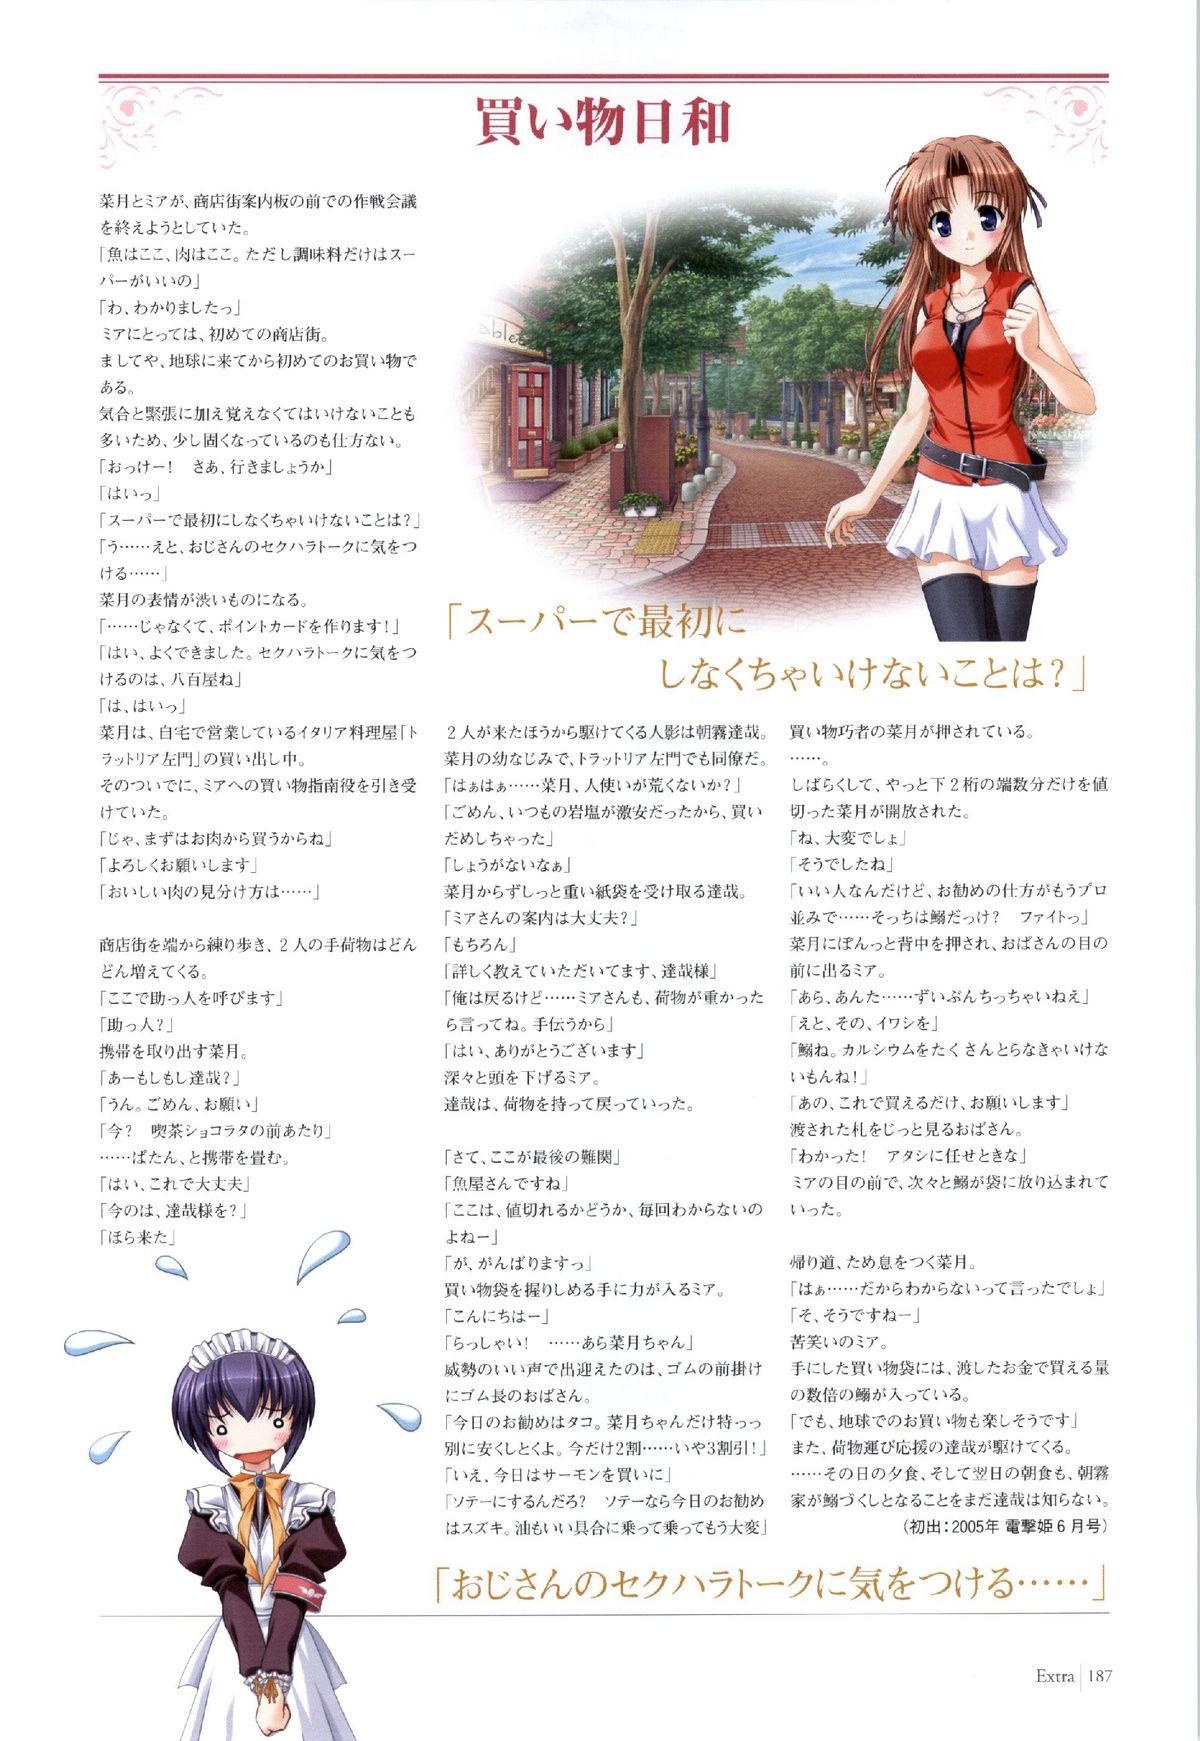 Yoake Mae Yori Ruri Iro Na ( Crescent Love ) Perfect Visual Book 183